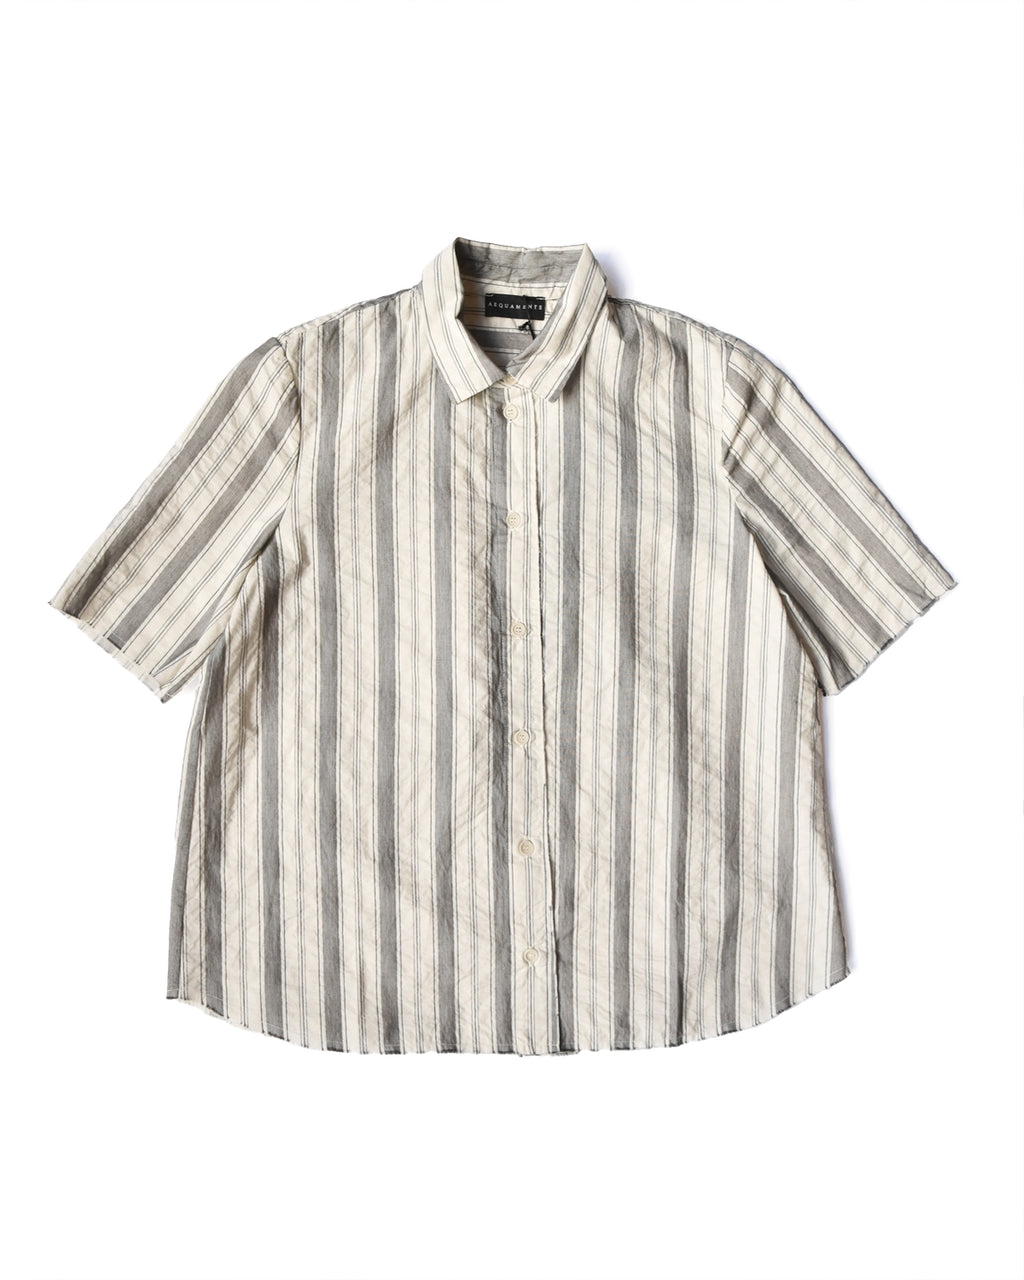 Aequamente Off White/Black Vertical Stripe Shirt